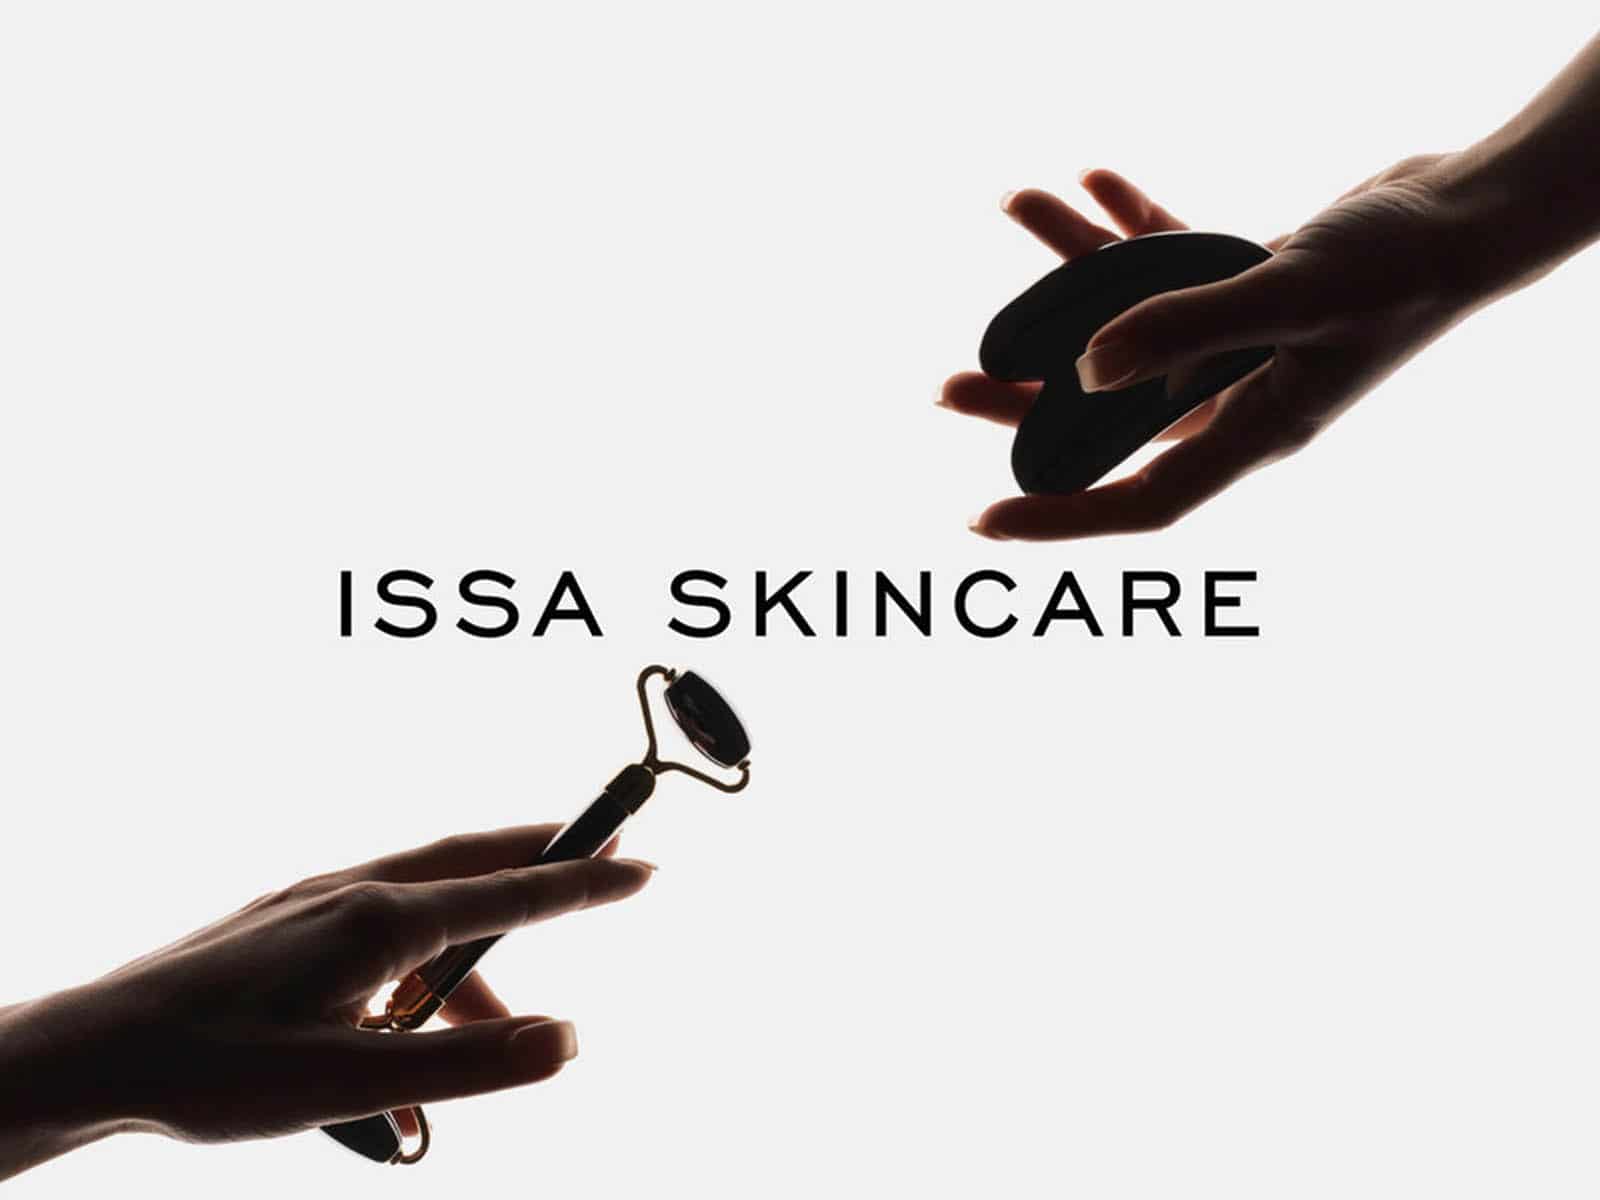 ISSA SKINCARE is born, Sandra Fennou’s beauty club